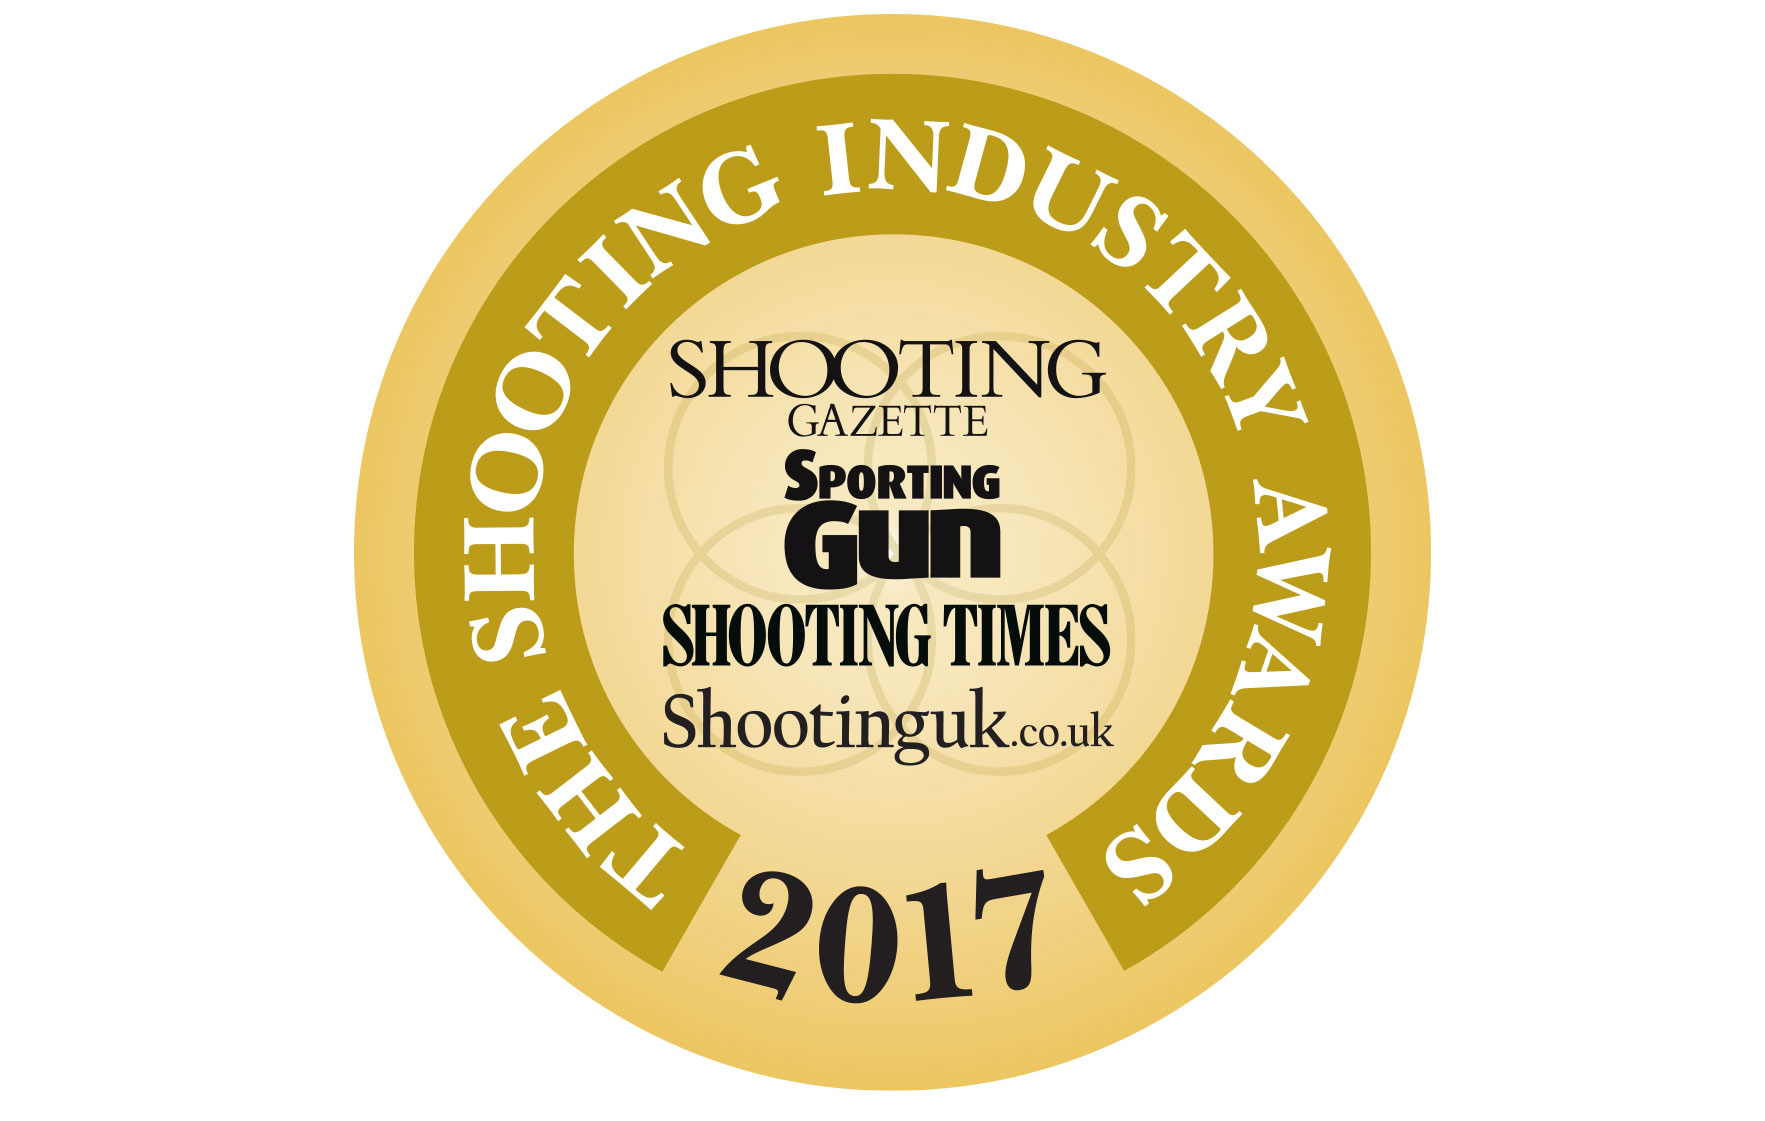 Enter Shooting Industry Awards 2017